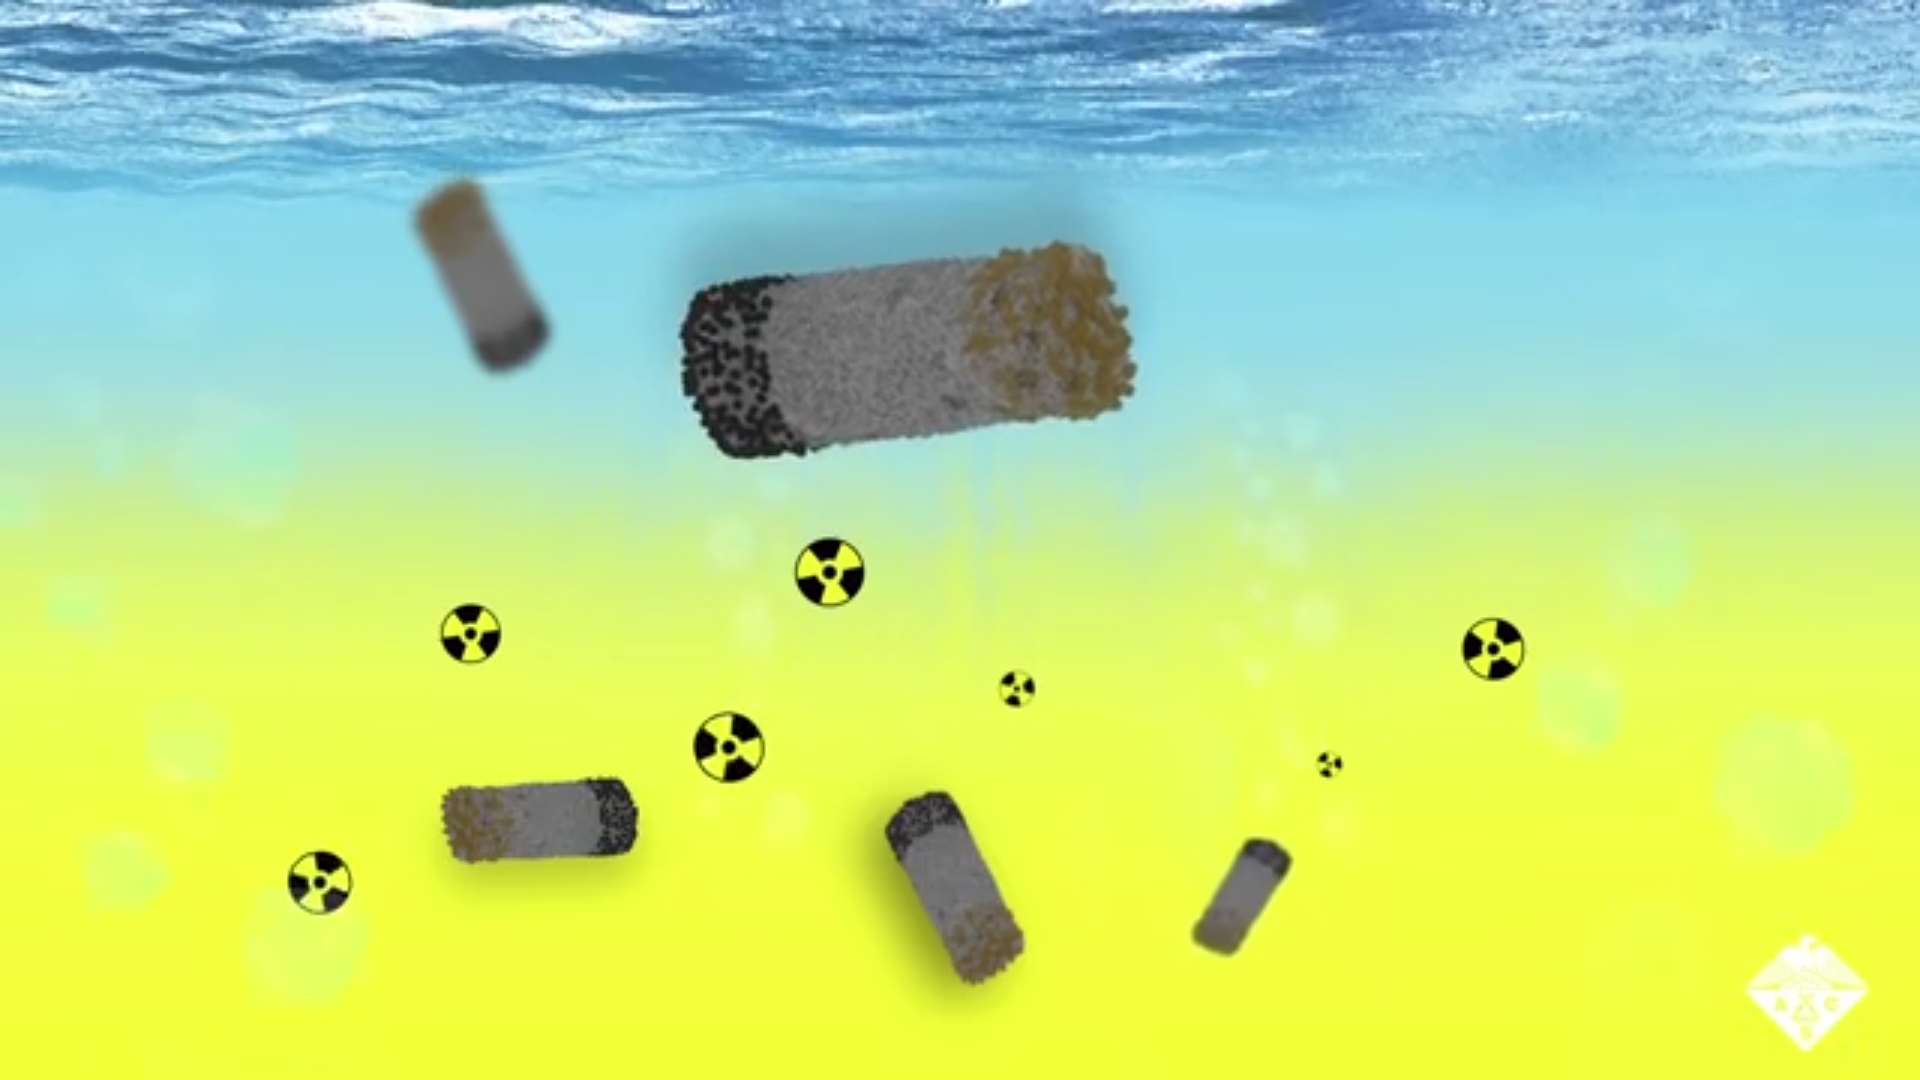 Microbot per eliminare i rifiuti radioattivi